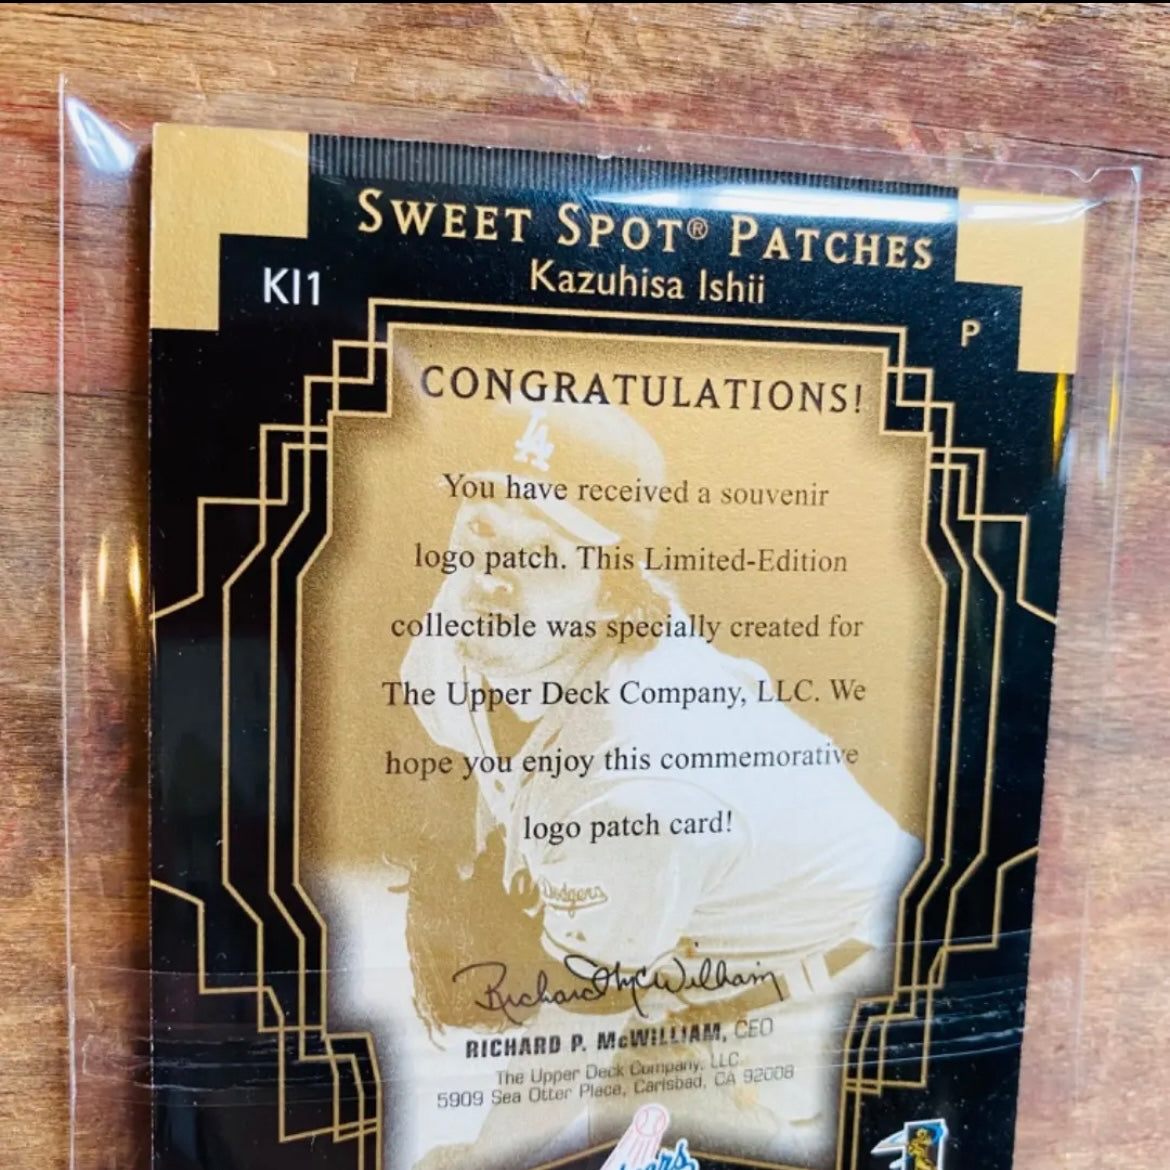 SWEET SPOT PATCHES MLB 記念ワッペン カード 17 石井一久